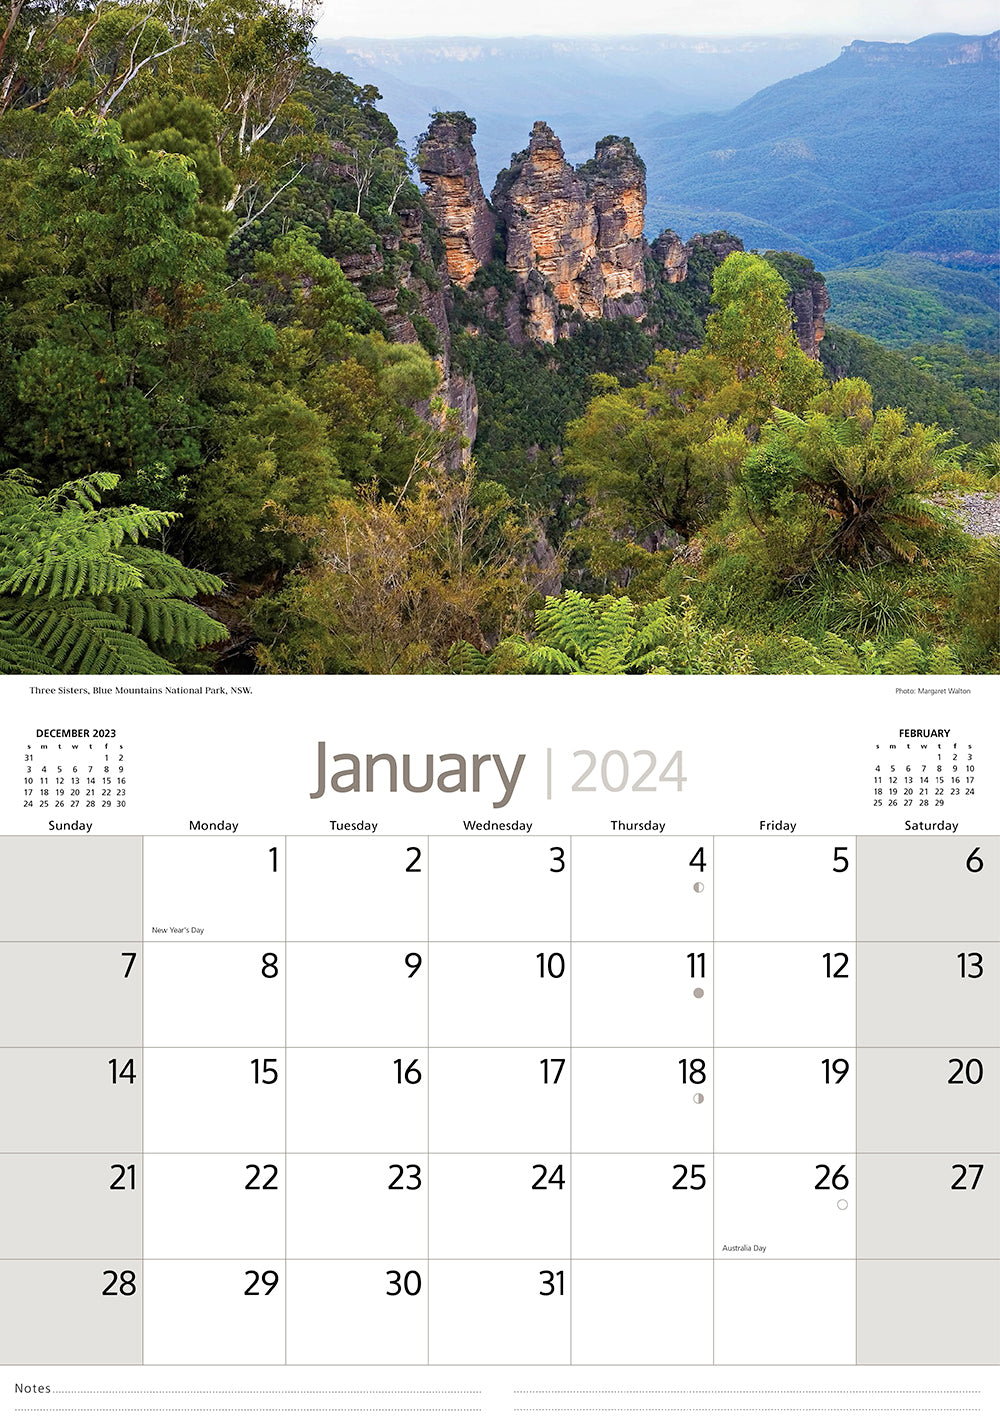 2024 National Parks & Gorges (by Artique) - Horizontal Wall Calendar